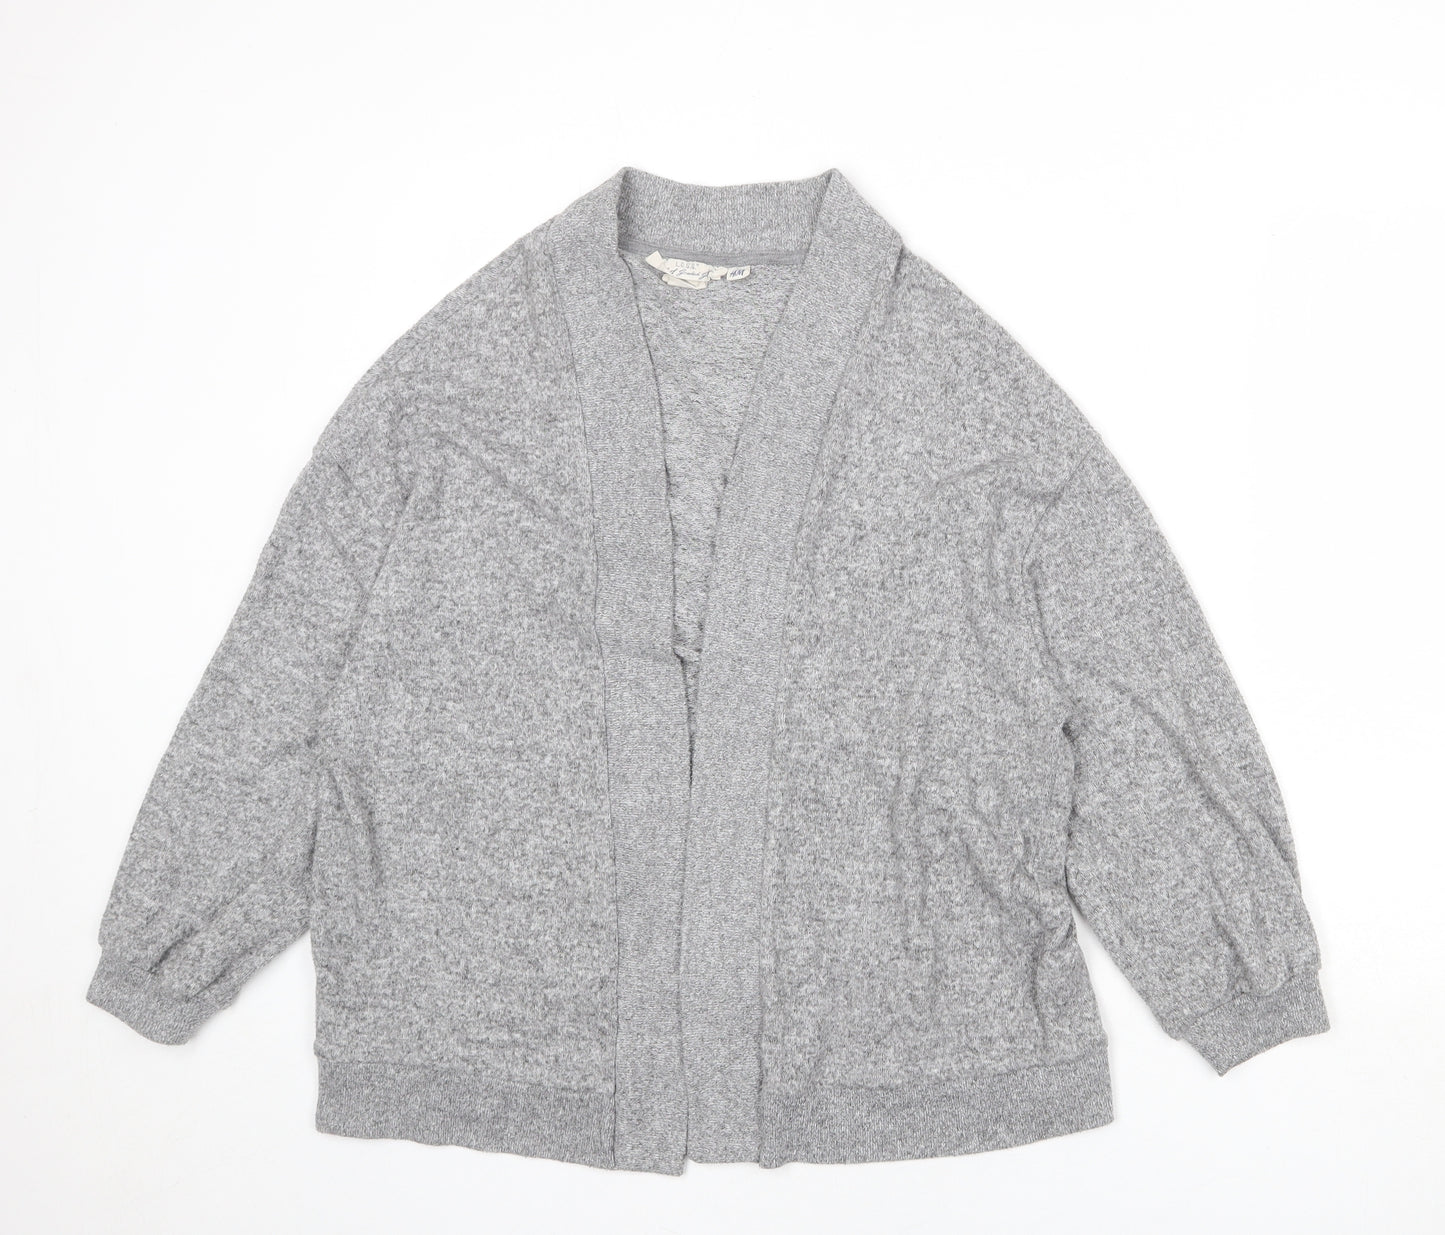 H&M Womens Grey V-Neck Polyester Cardigan Jumper Size XS